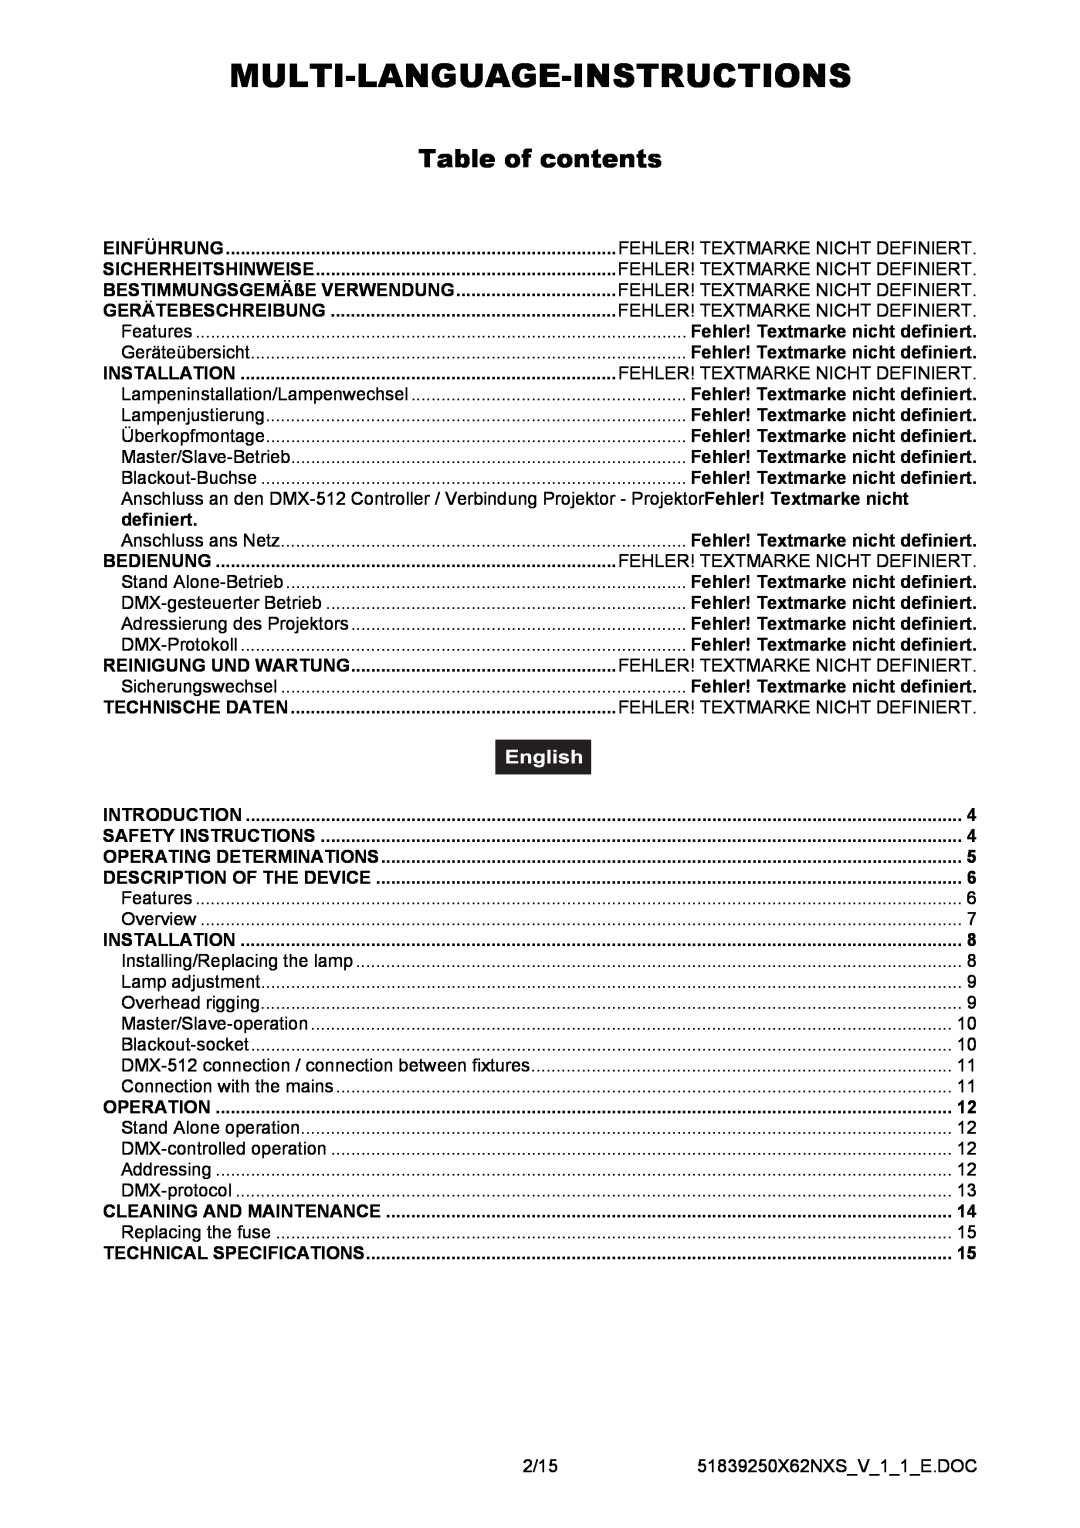 Futuretech 250 user manual Table of contents, Multi-Language-Instructions, Fehler! Textmarke nicht definiert 